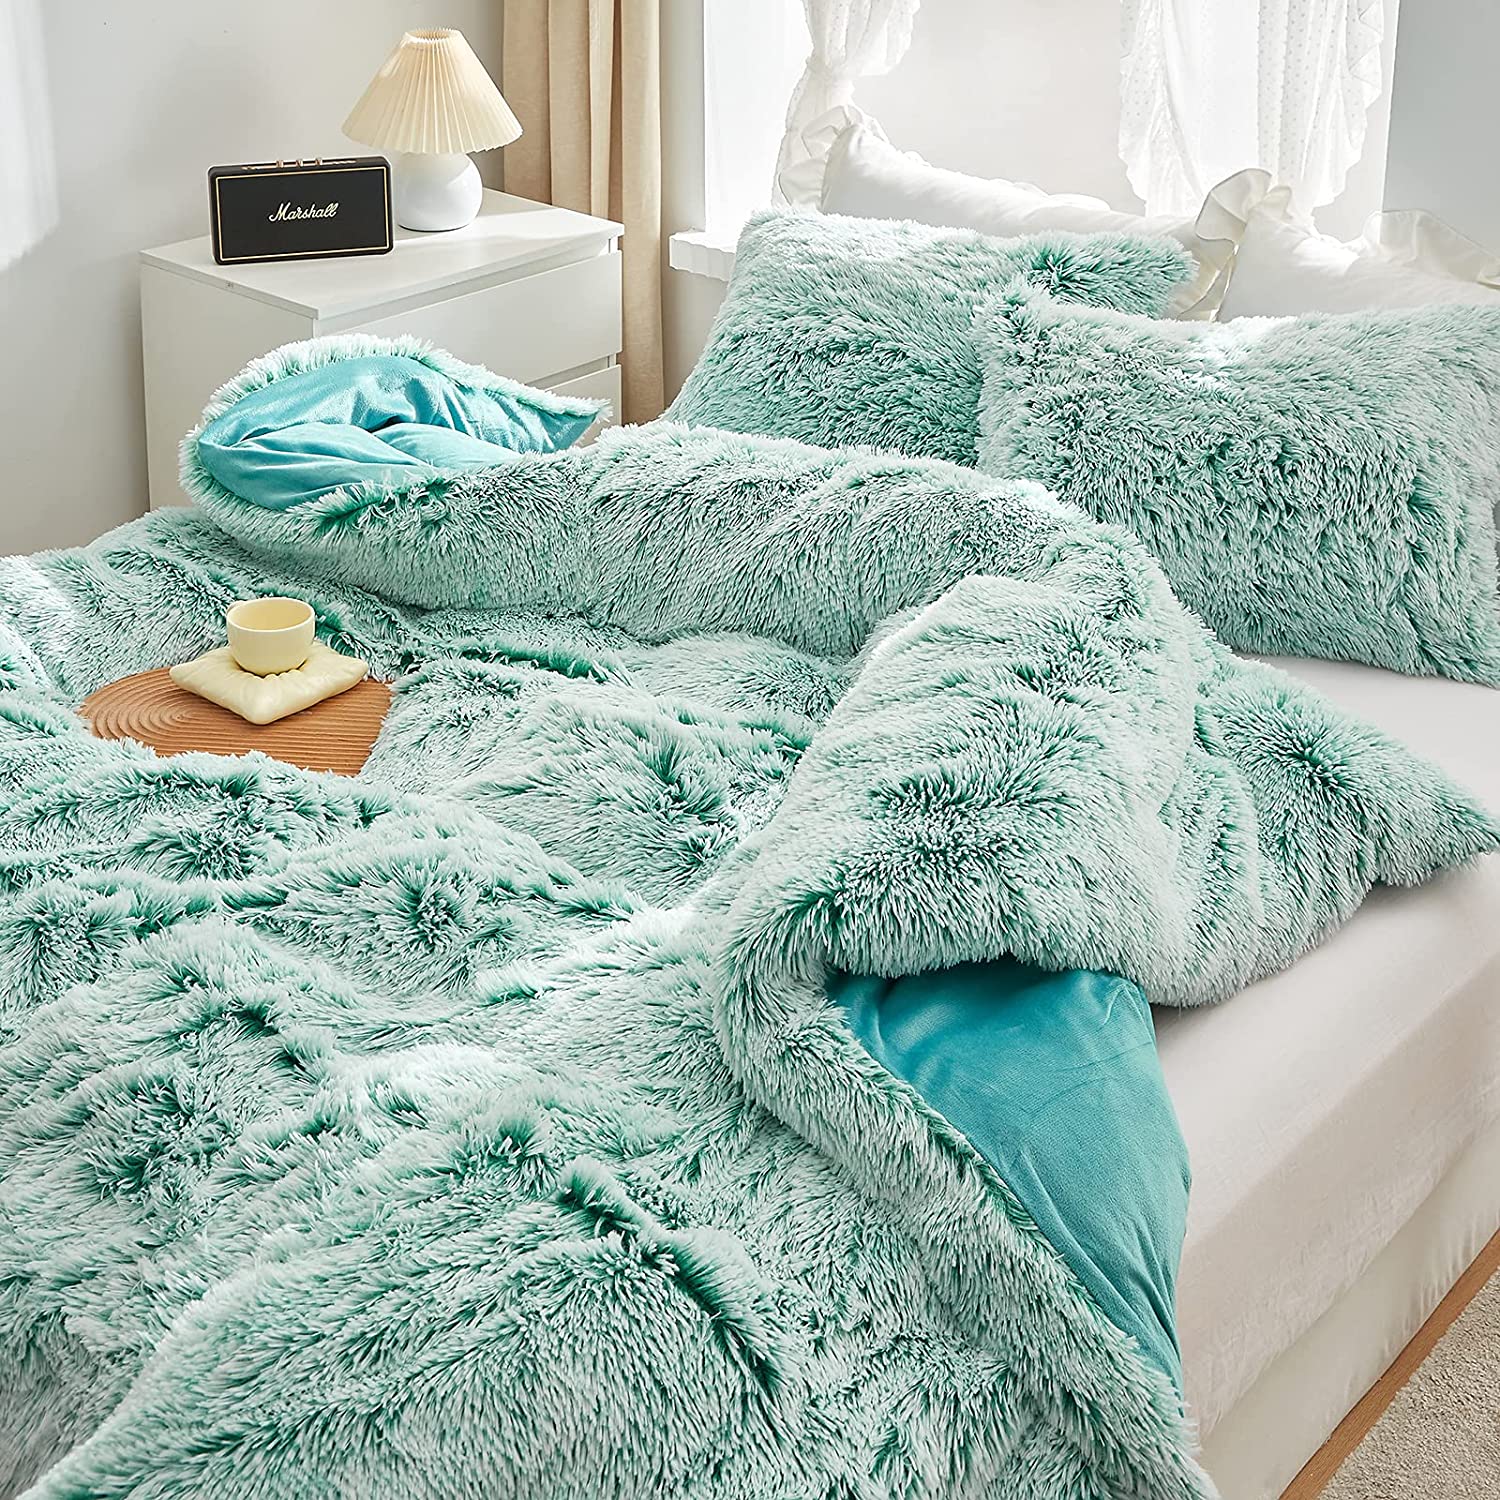 Price:$54.99  3 Piece Luxury Plush Shaggy Flannel Duvet Cover Set Ultra Soft Faux Fur Fluffy Bedding Set, Super Warm for Winter, Zipper Close (Mixed Aqua & White, Queen) : Home & Kitchen